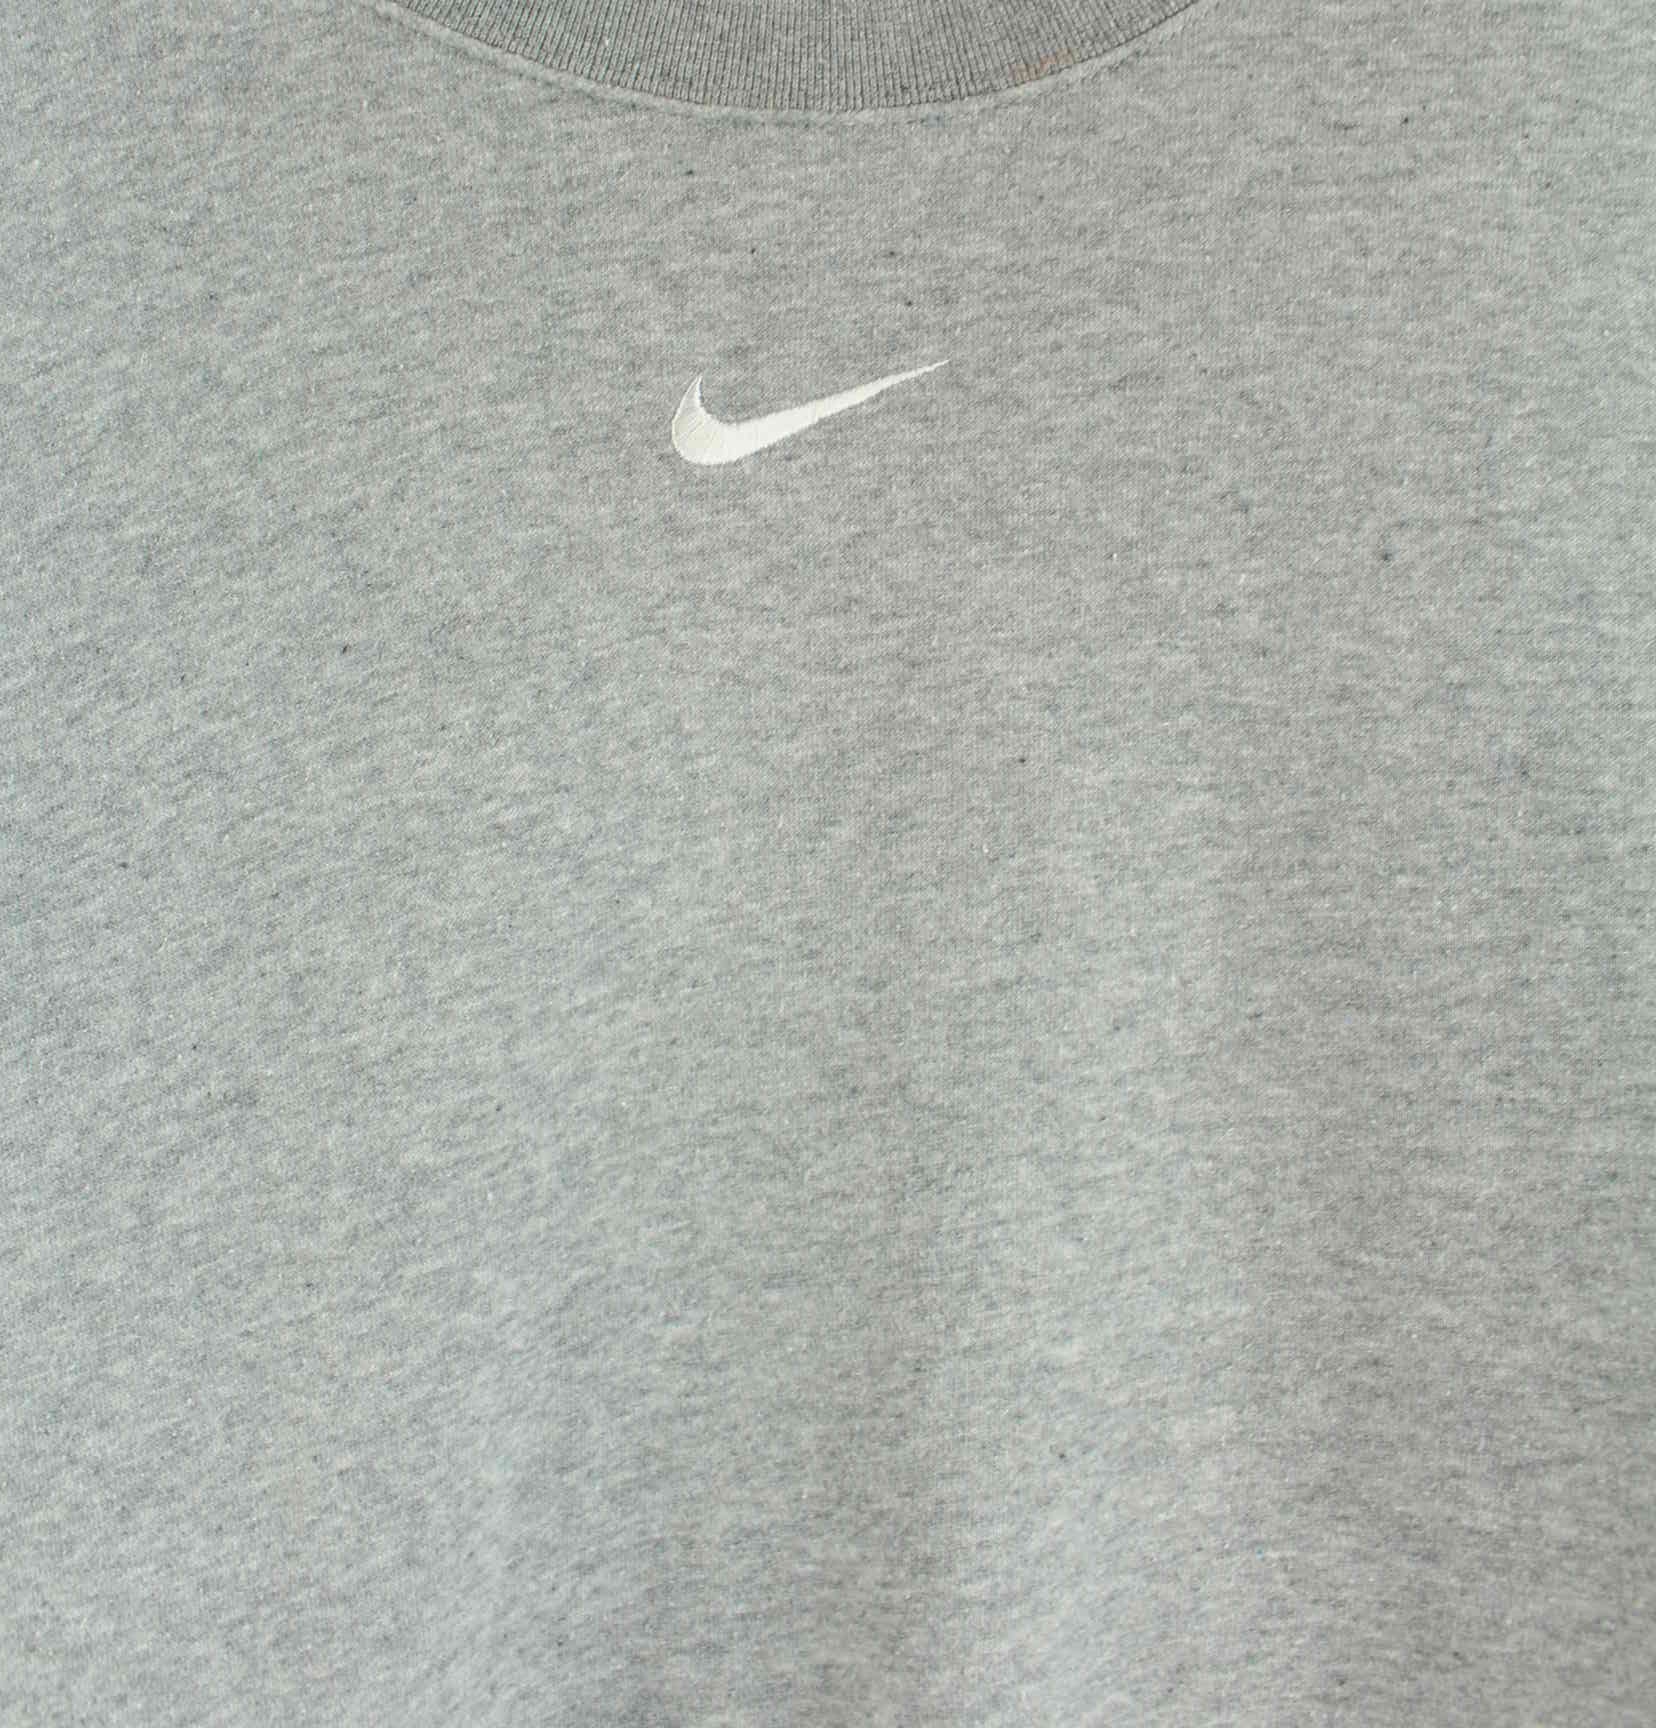 Nike Damen Crop Center Swoosh Sweater Grau S (detail image 1)